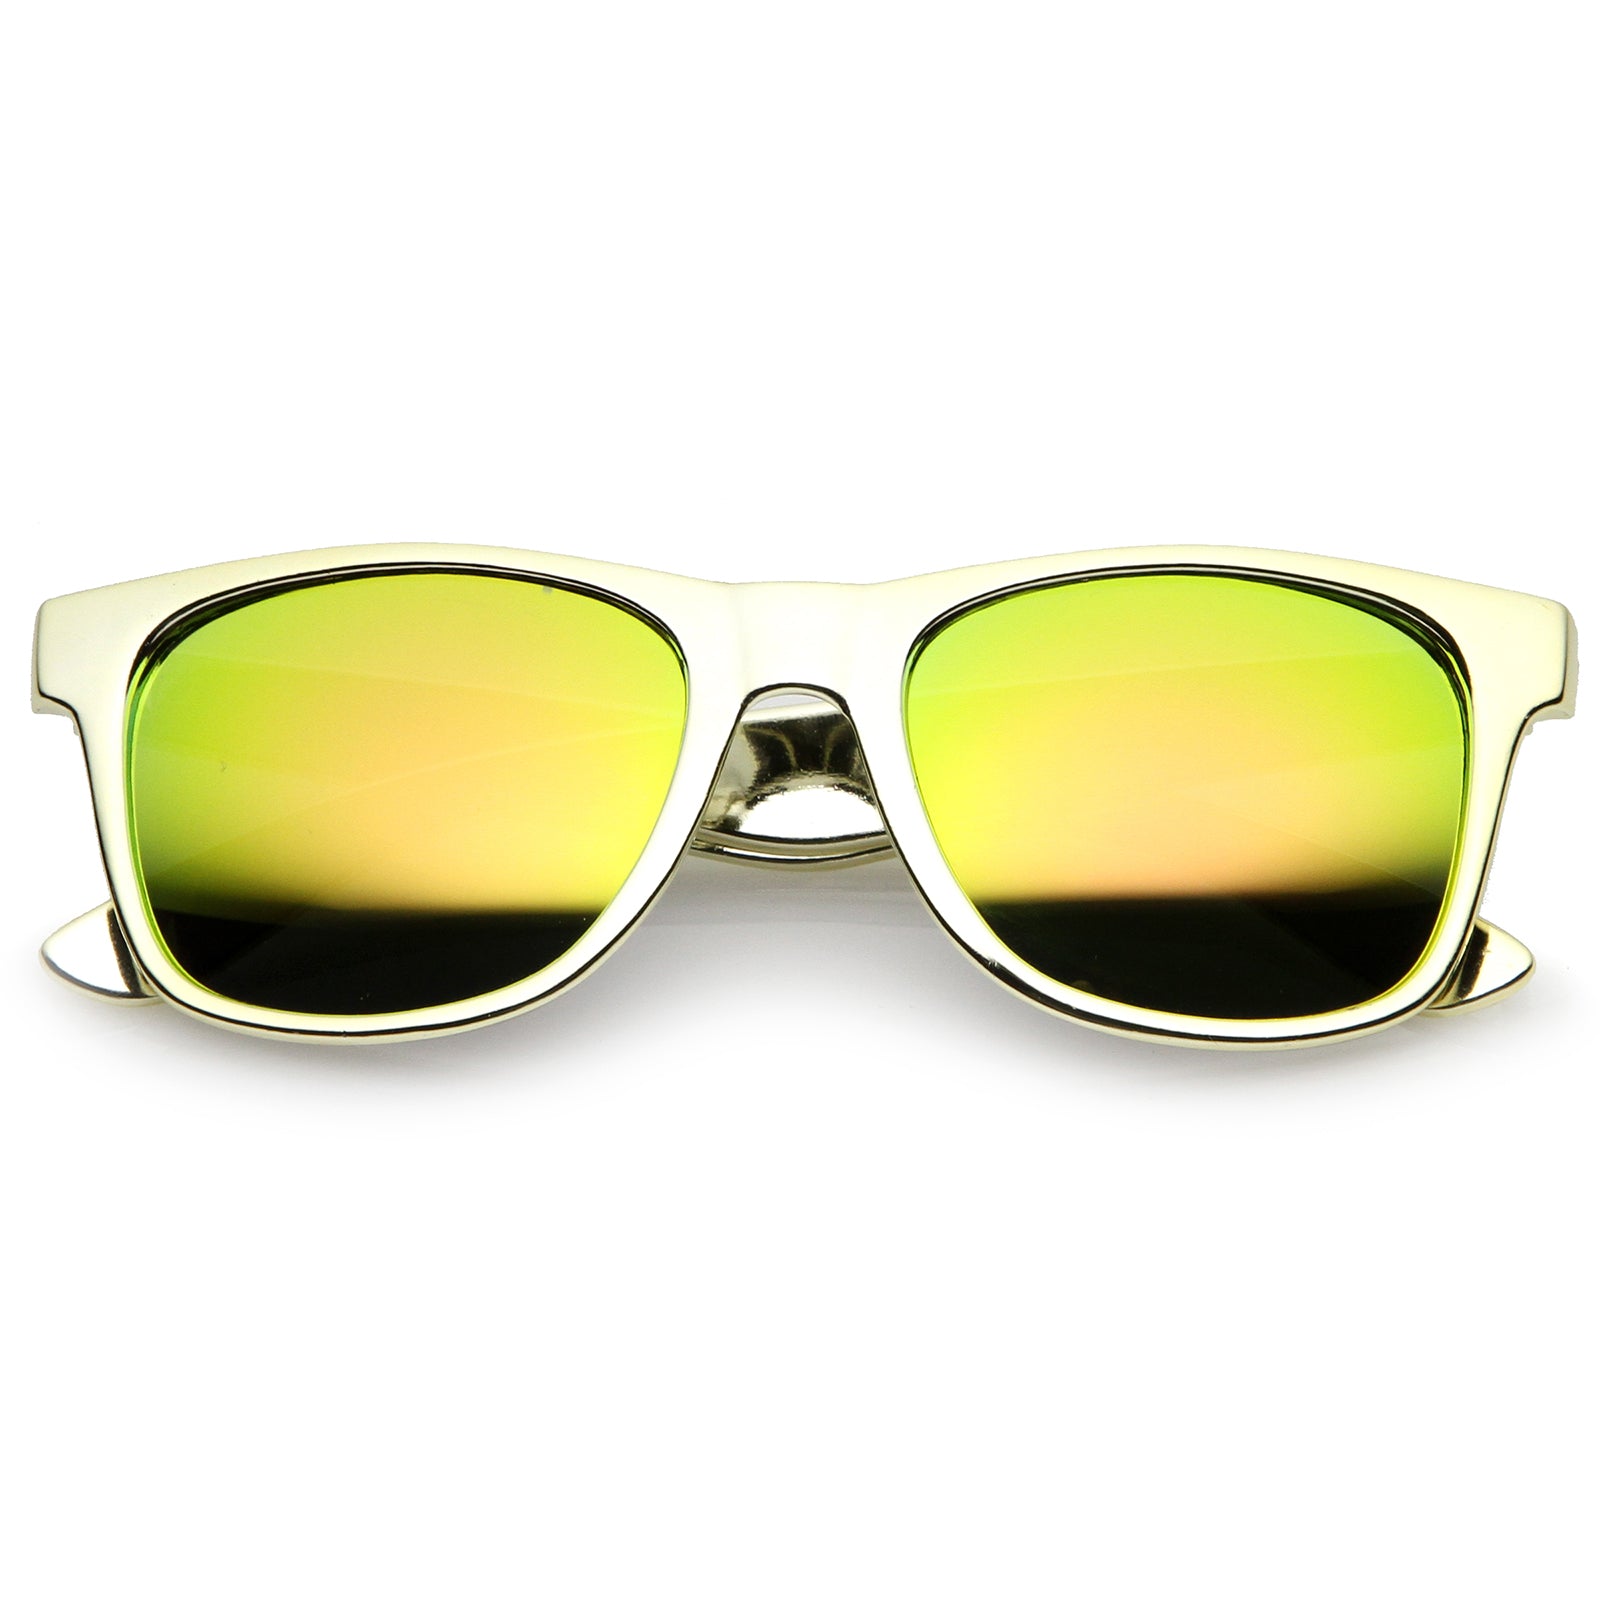 Retro Metallic Square Colored Mirror Lens Horn Rimmed Sunglasses 55mm